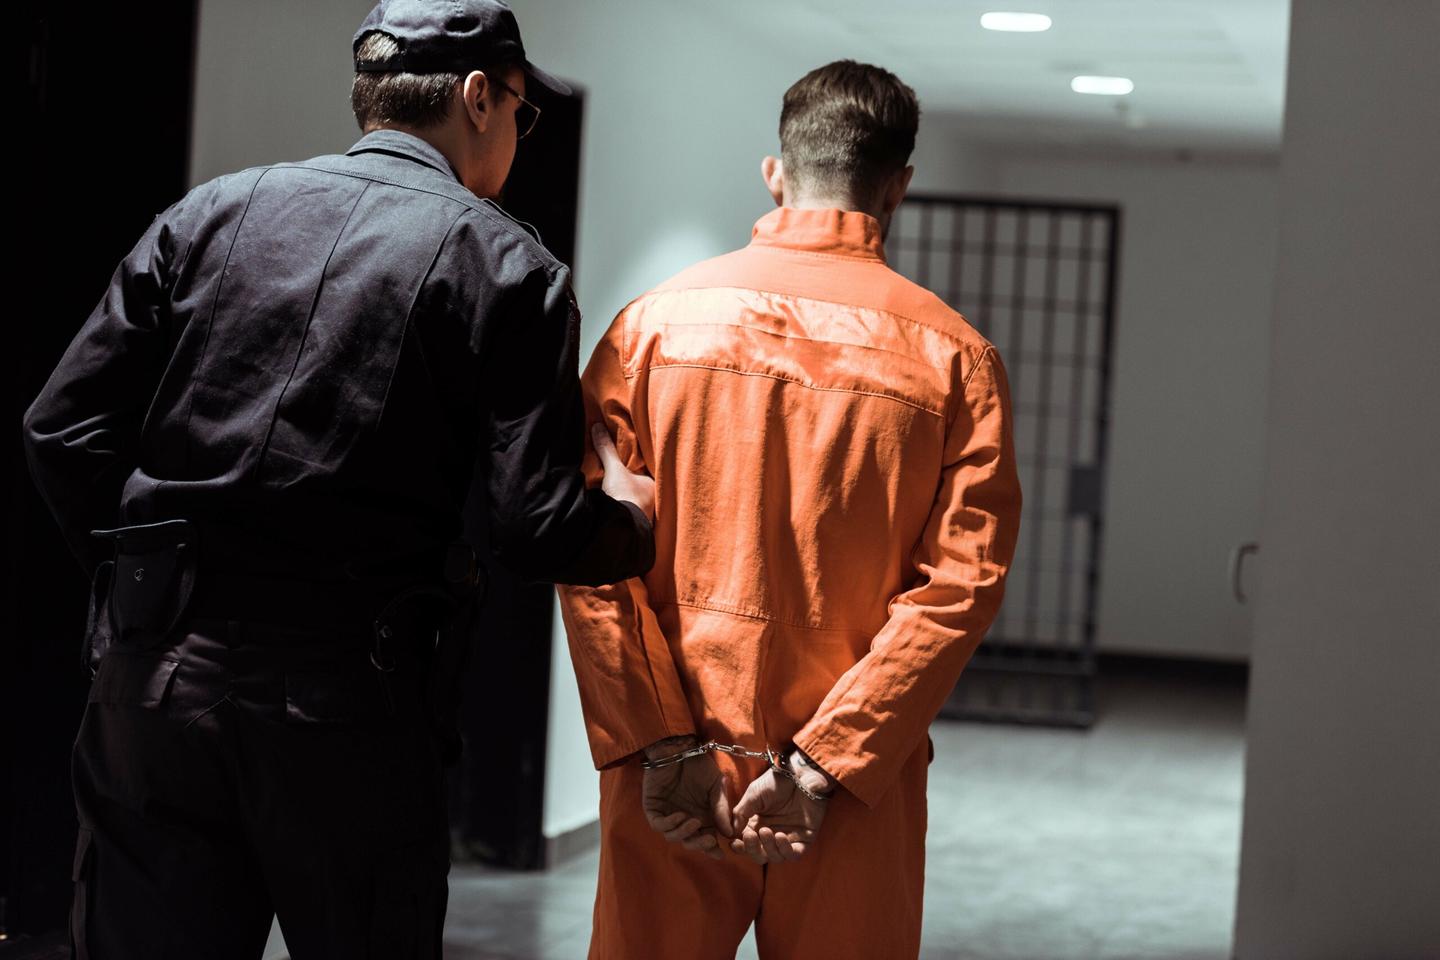 A corrections officer guides an inmate through a correctional facility